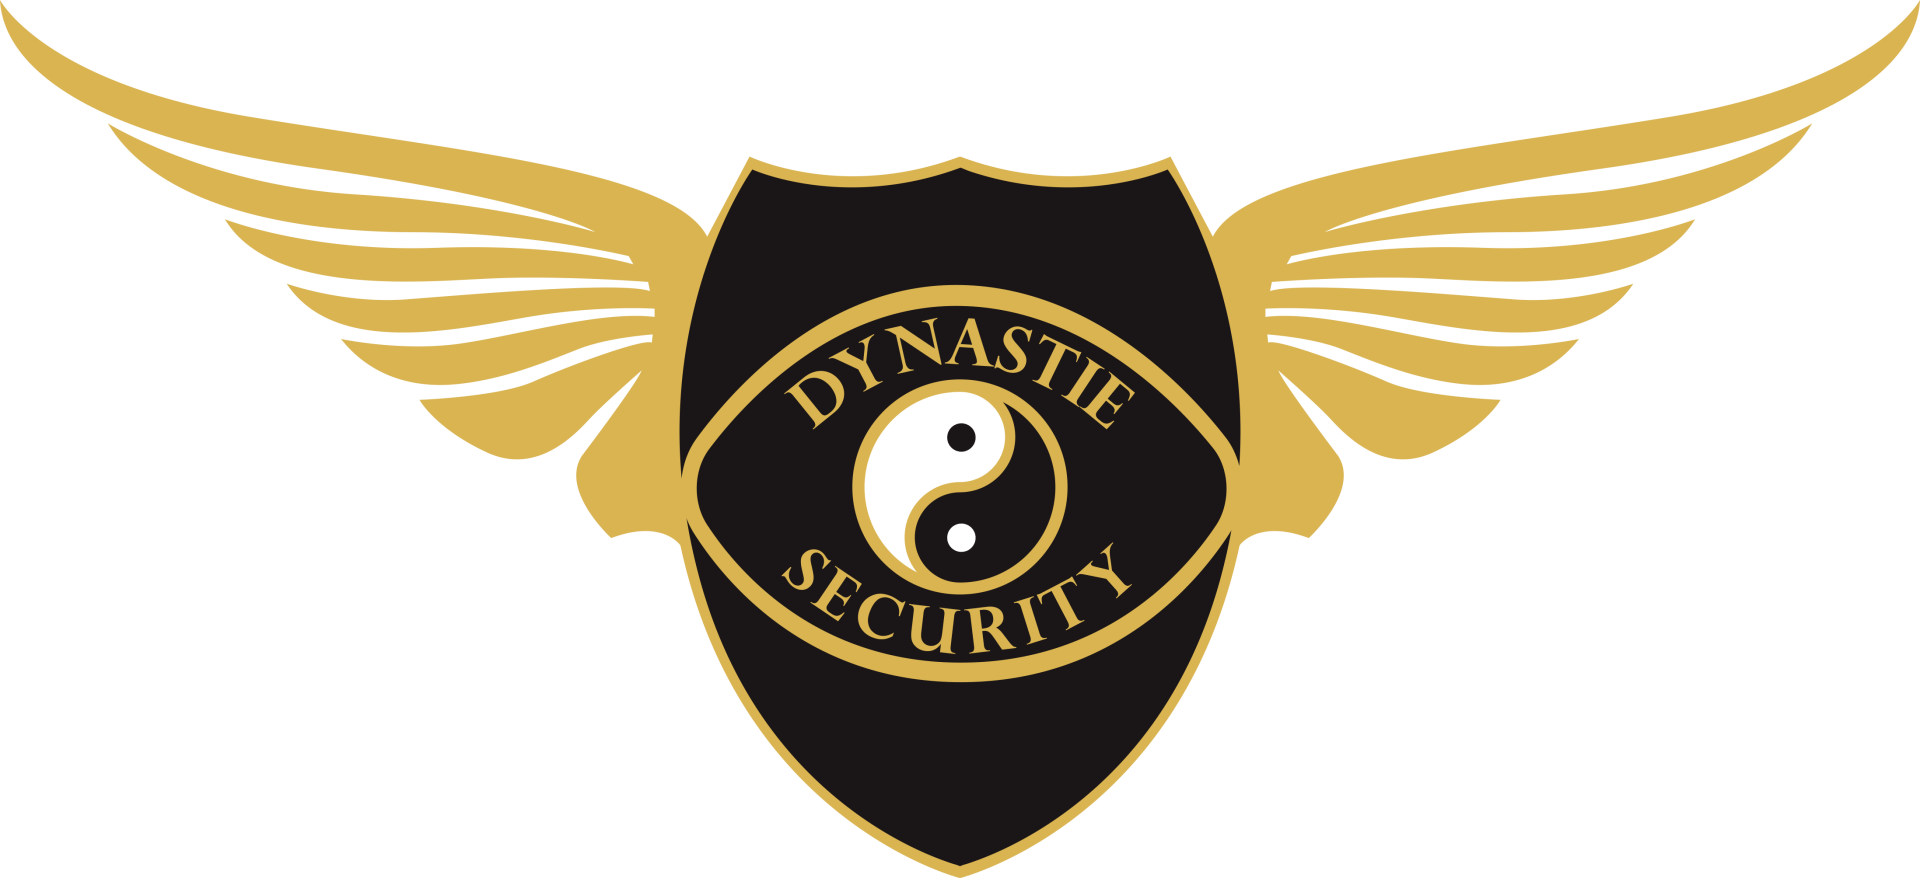 dynastie_securite-1-720w.png